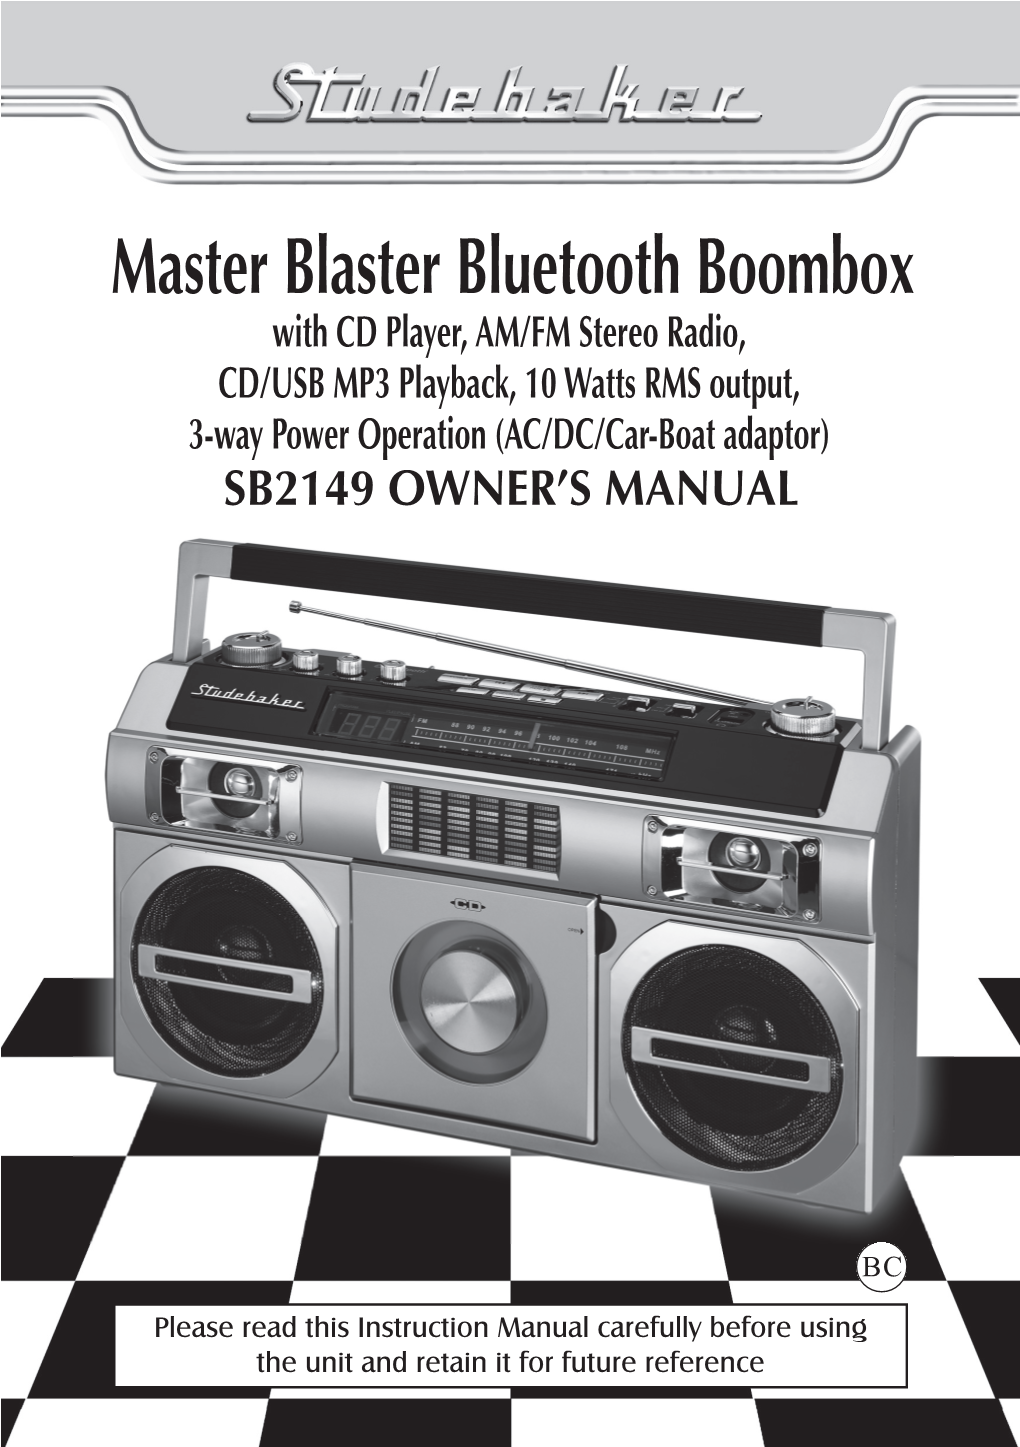 Master Blaster Bluetooth Boombox